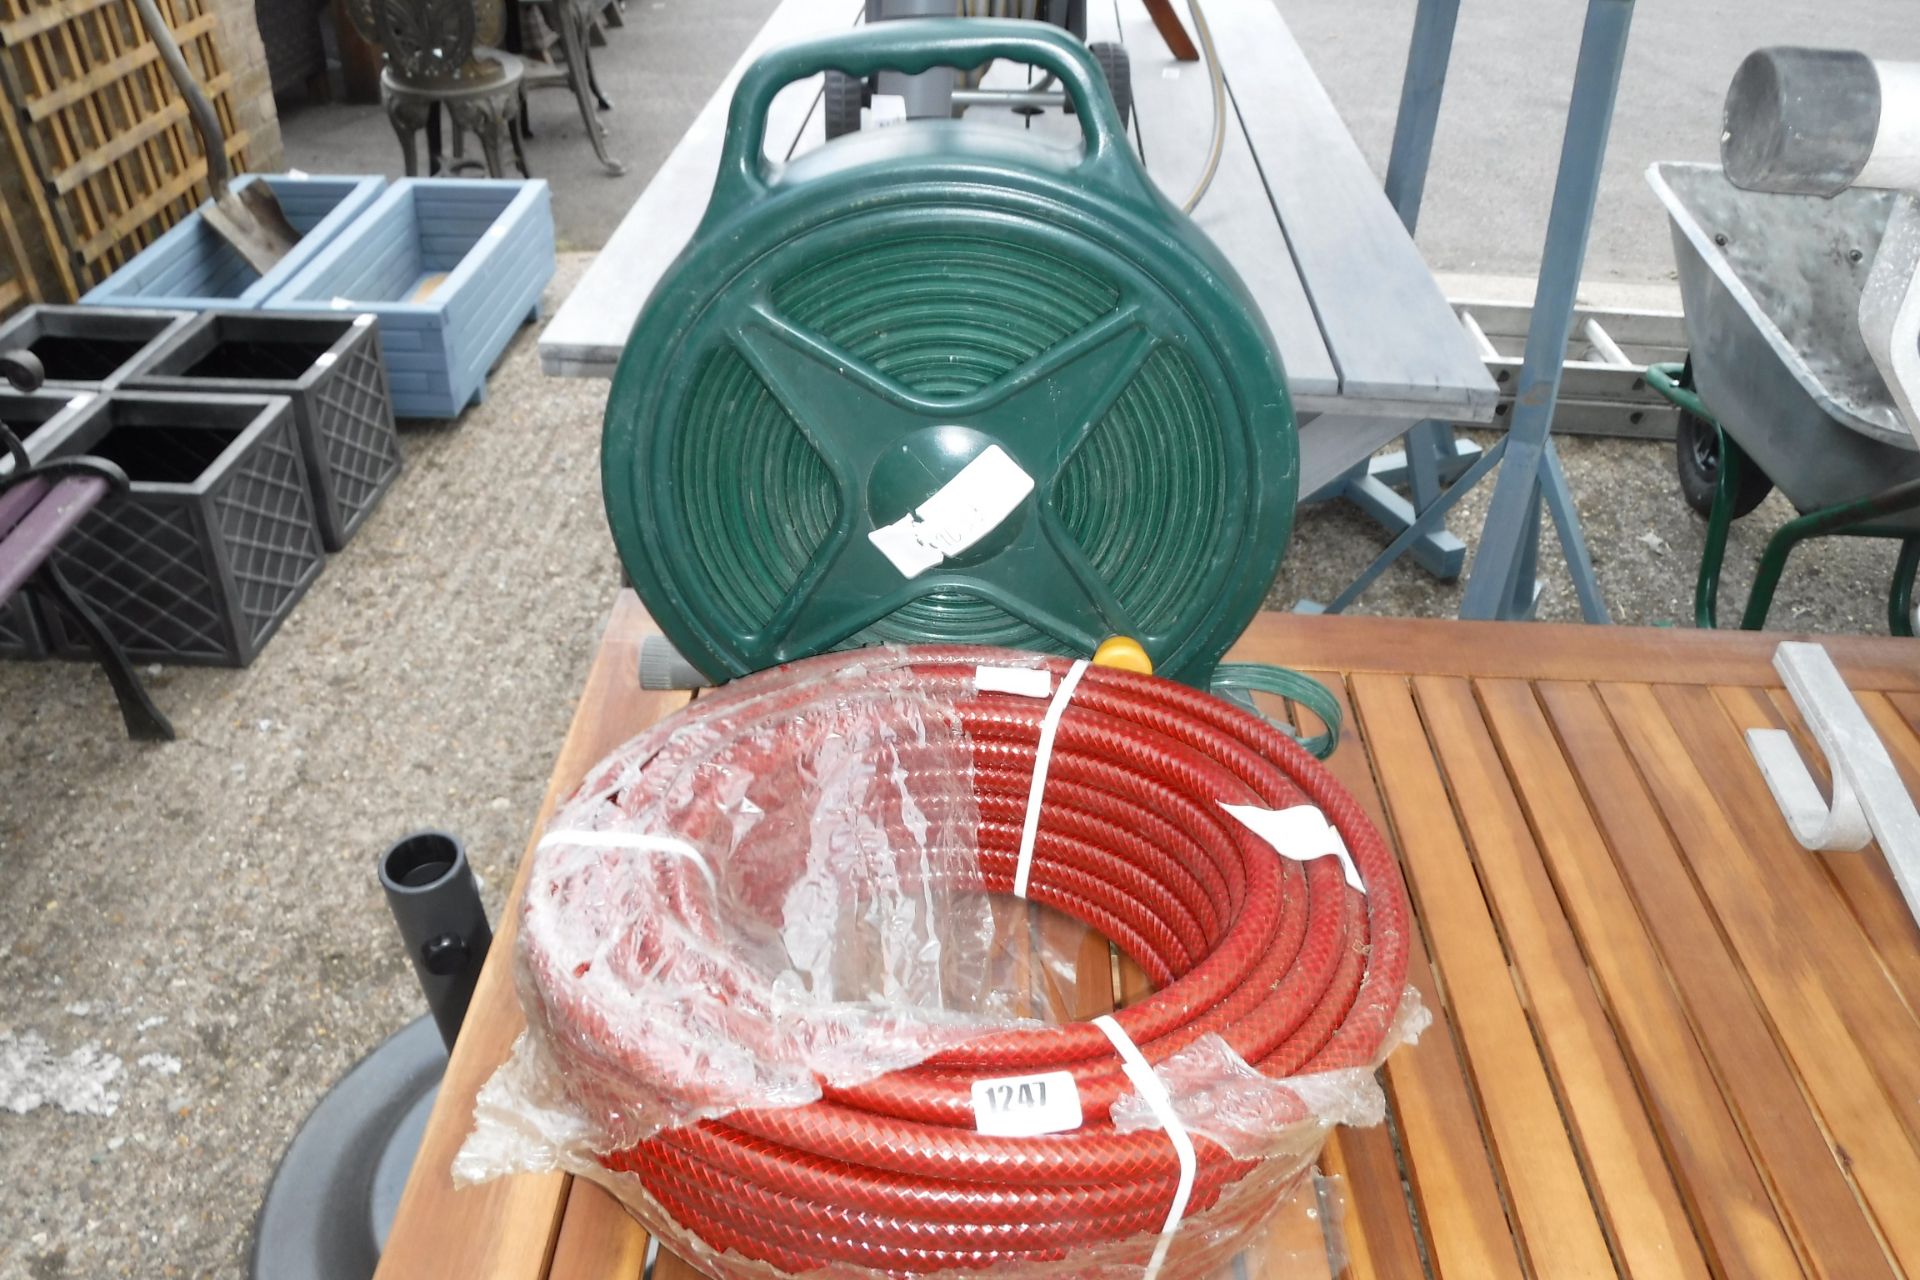 Reel of red garden hose with hose on reel